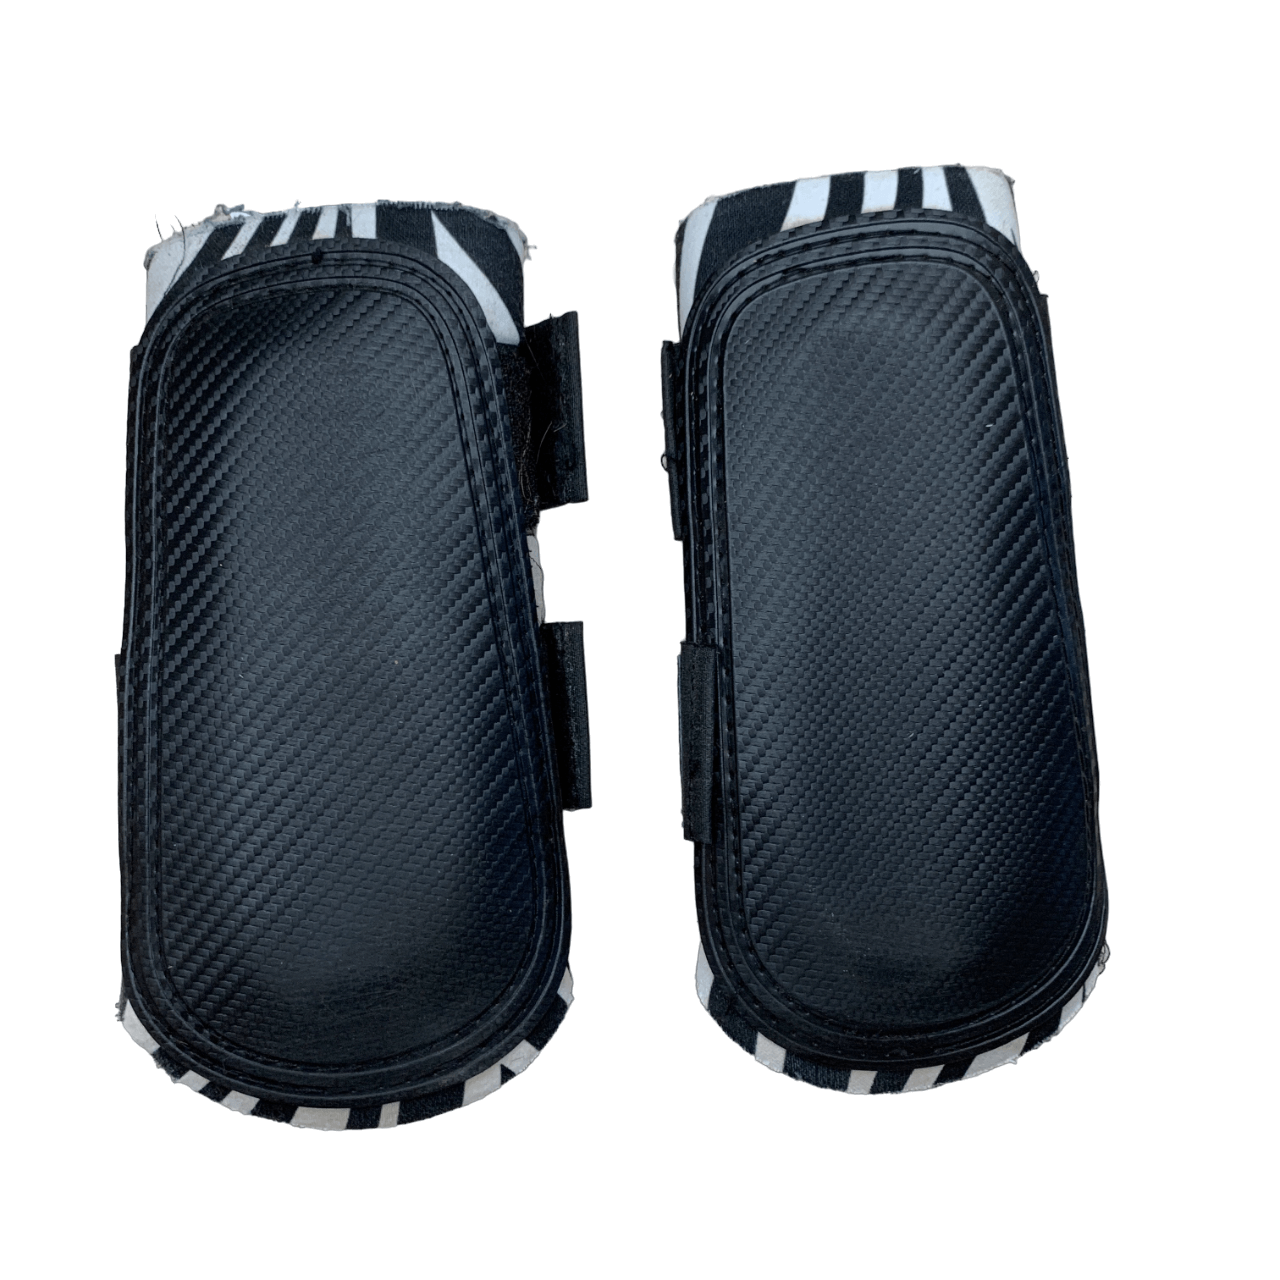 Woof Wear 'Sport Range' Brushing Boots in Zebra Print - Medium